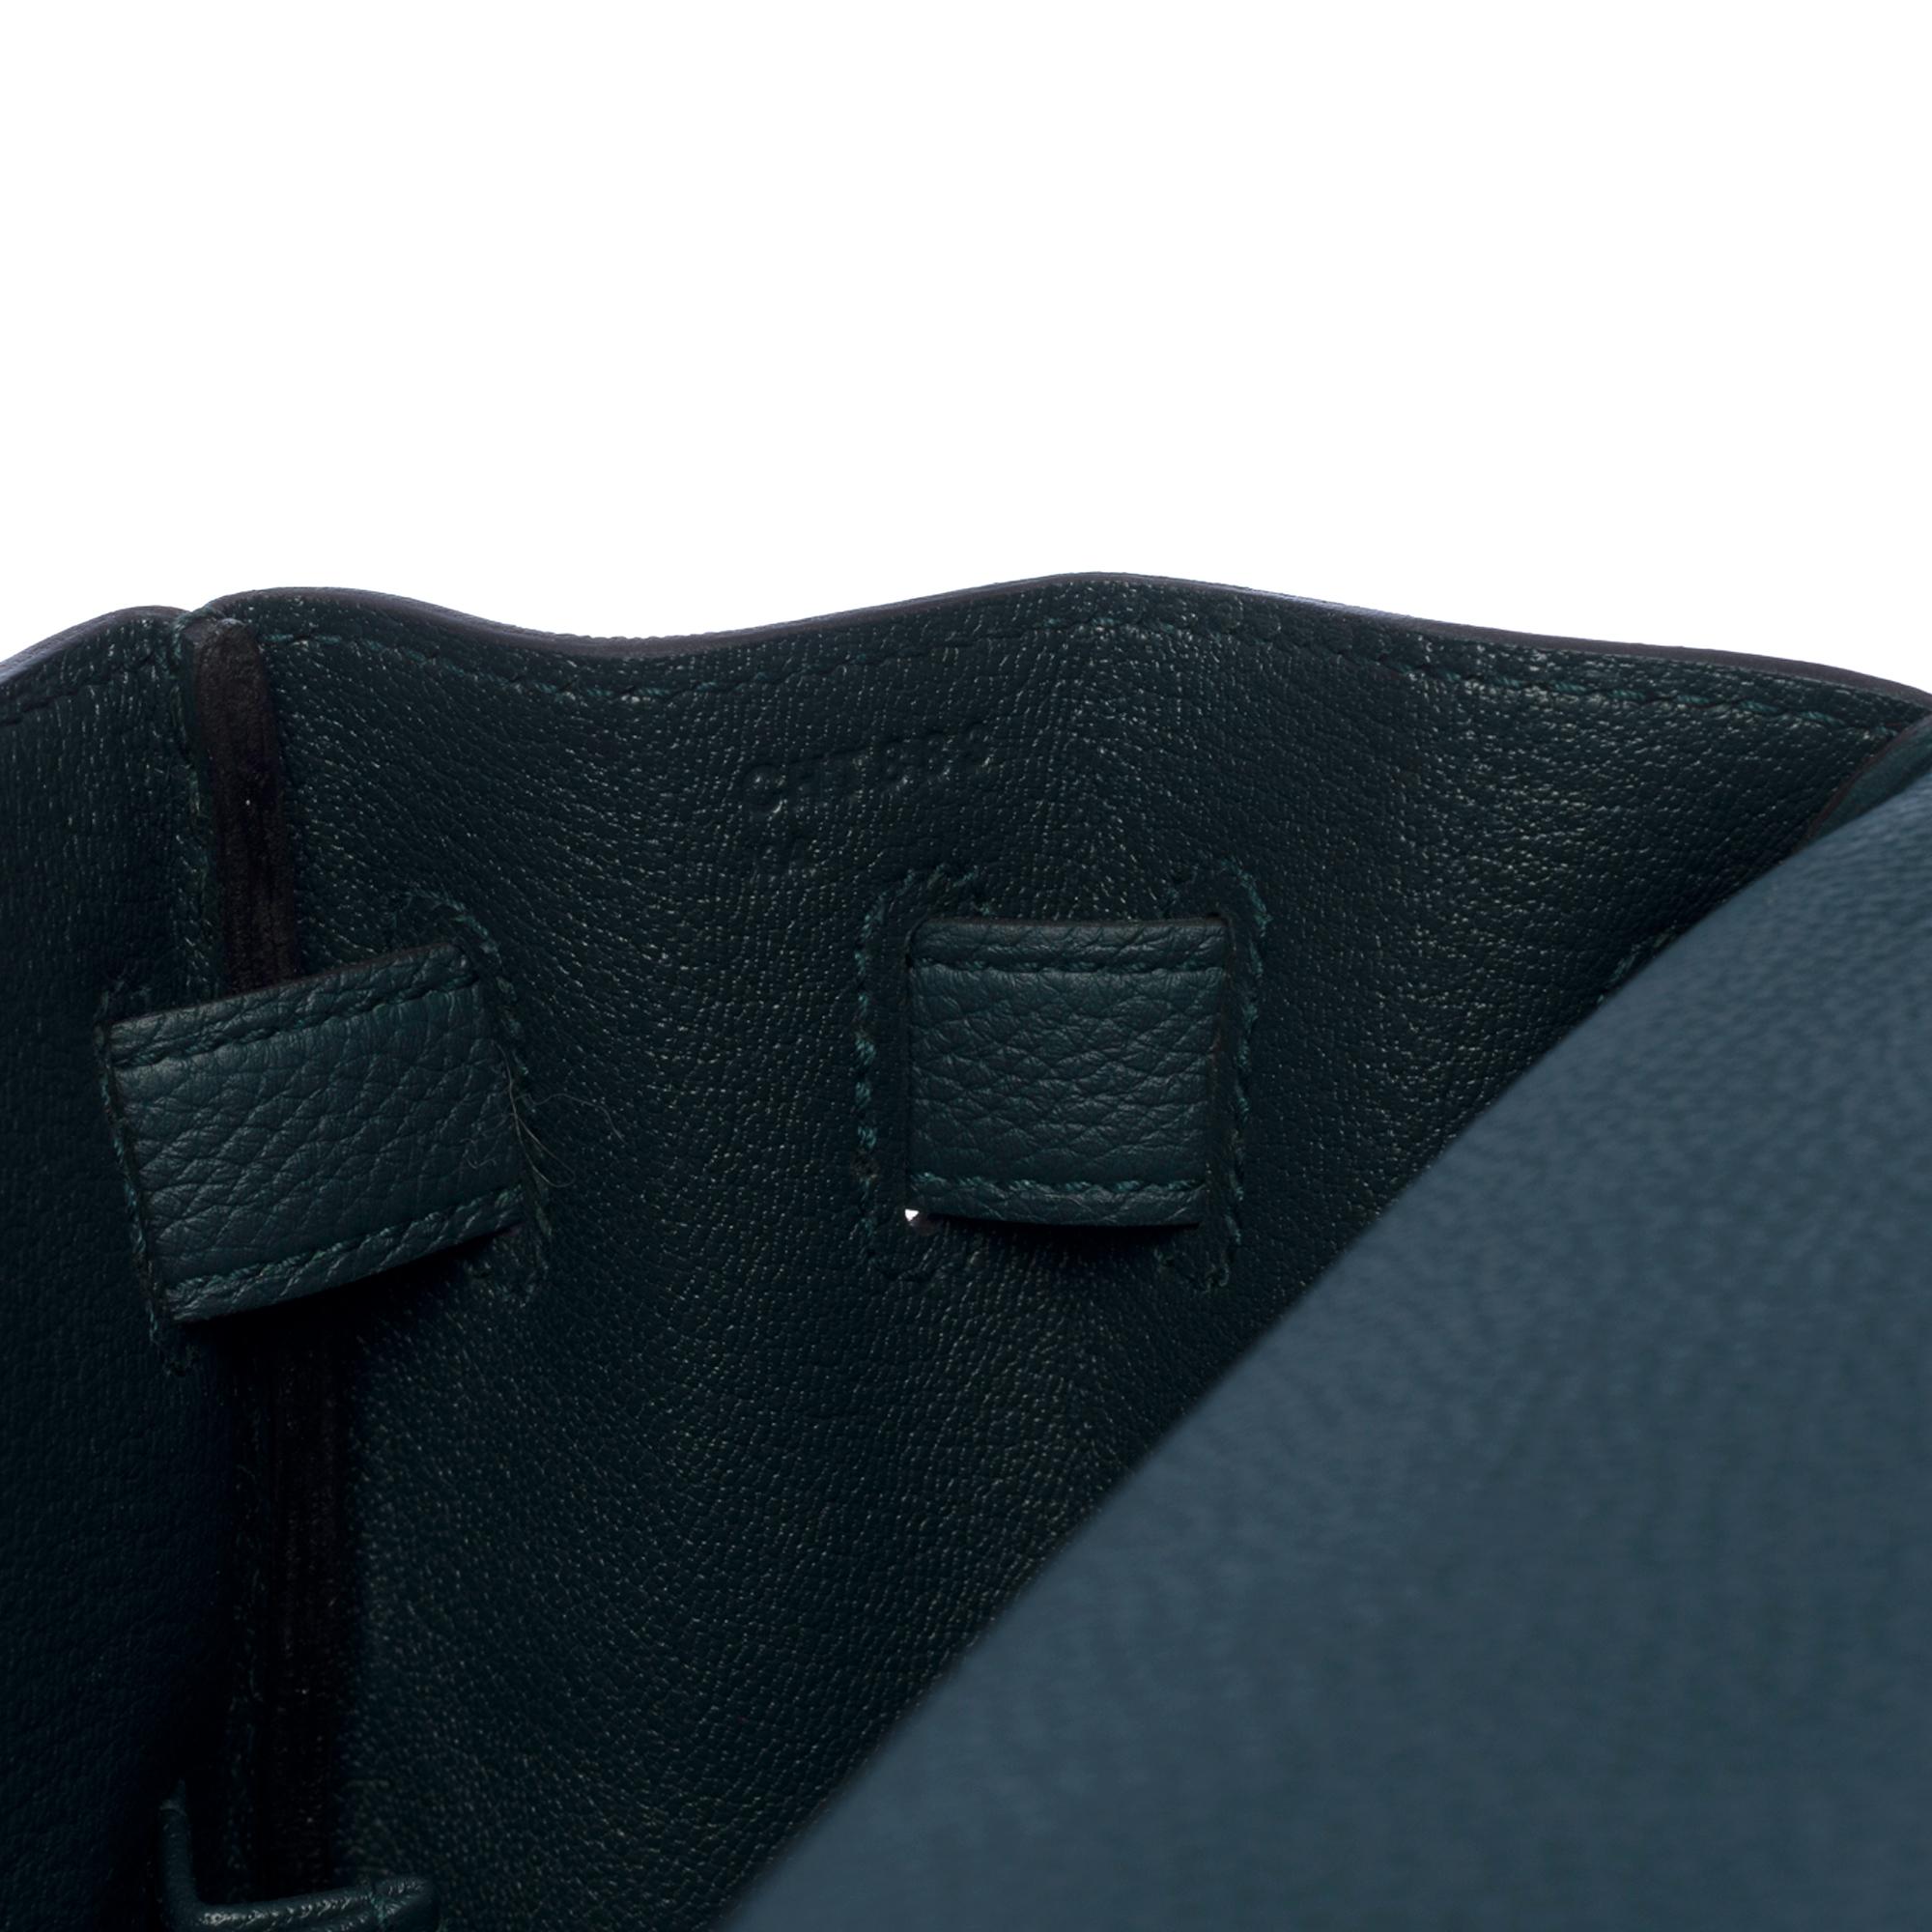 New Hermès Kelly 32 retourne handbag strap in Green Cypres Togo leather, SHW 3